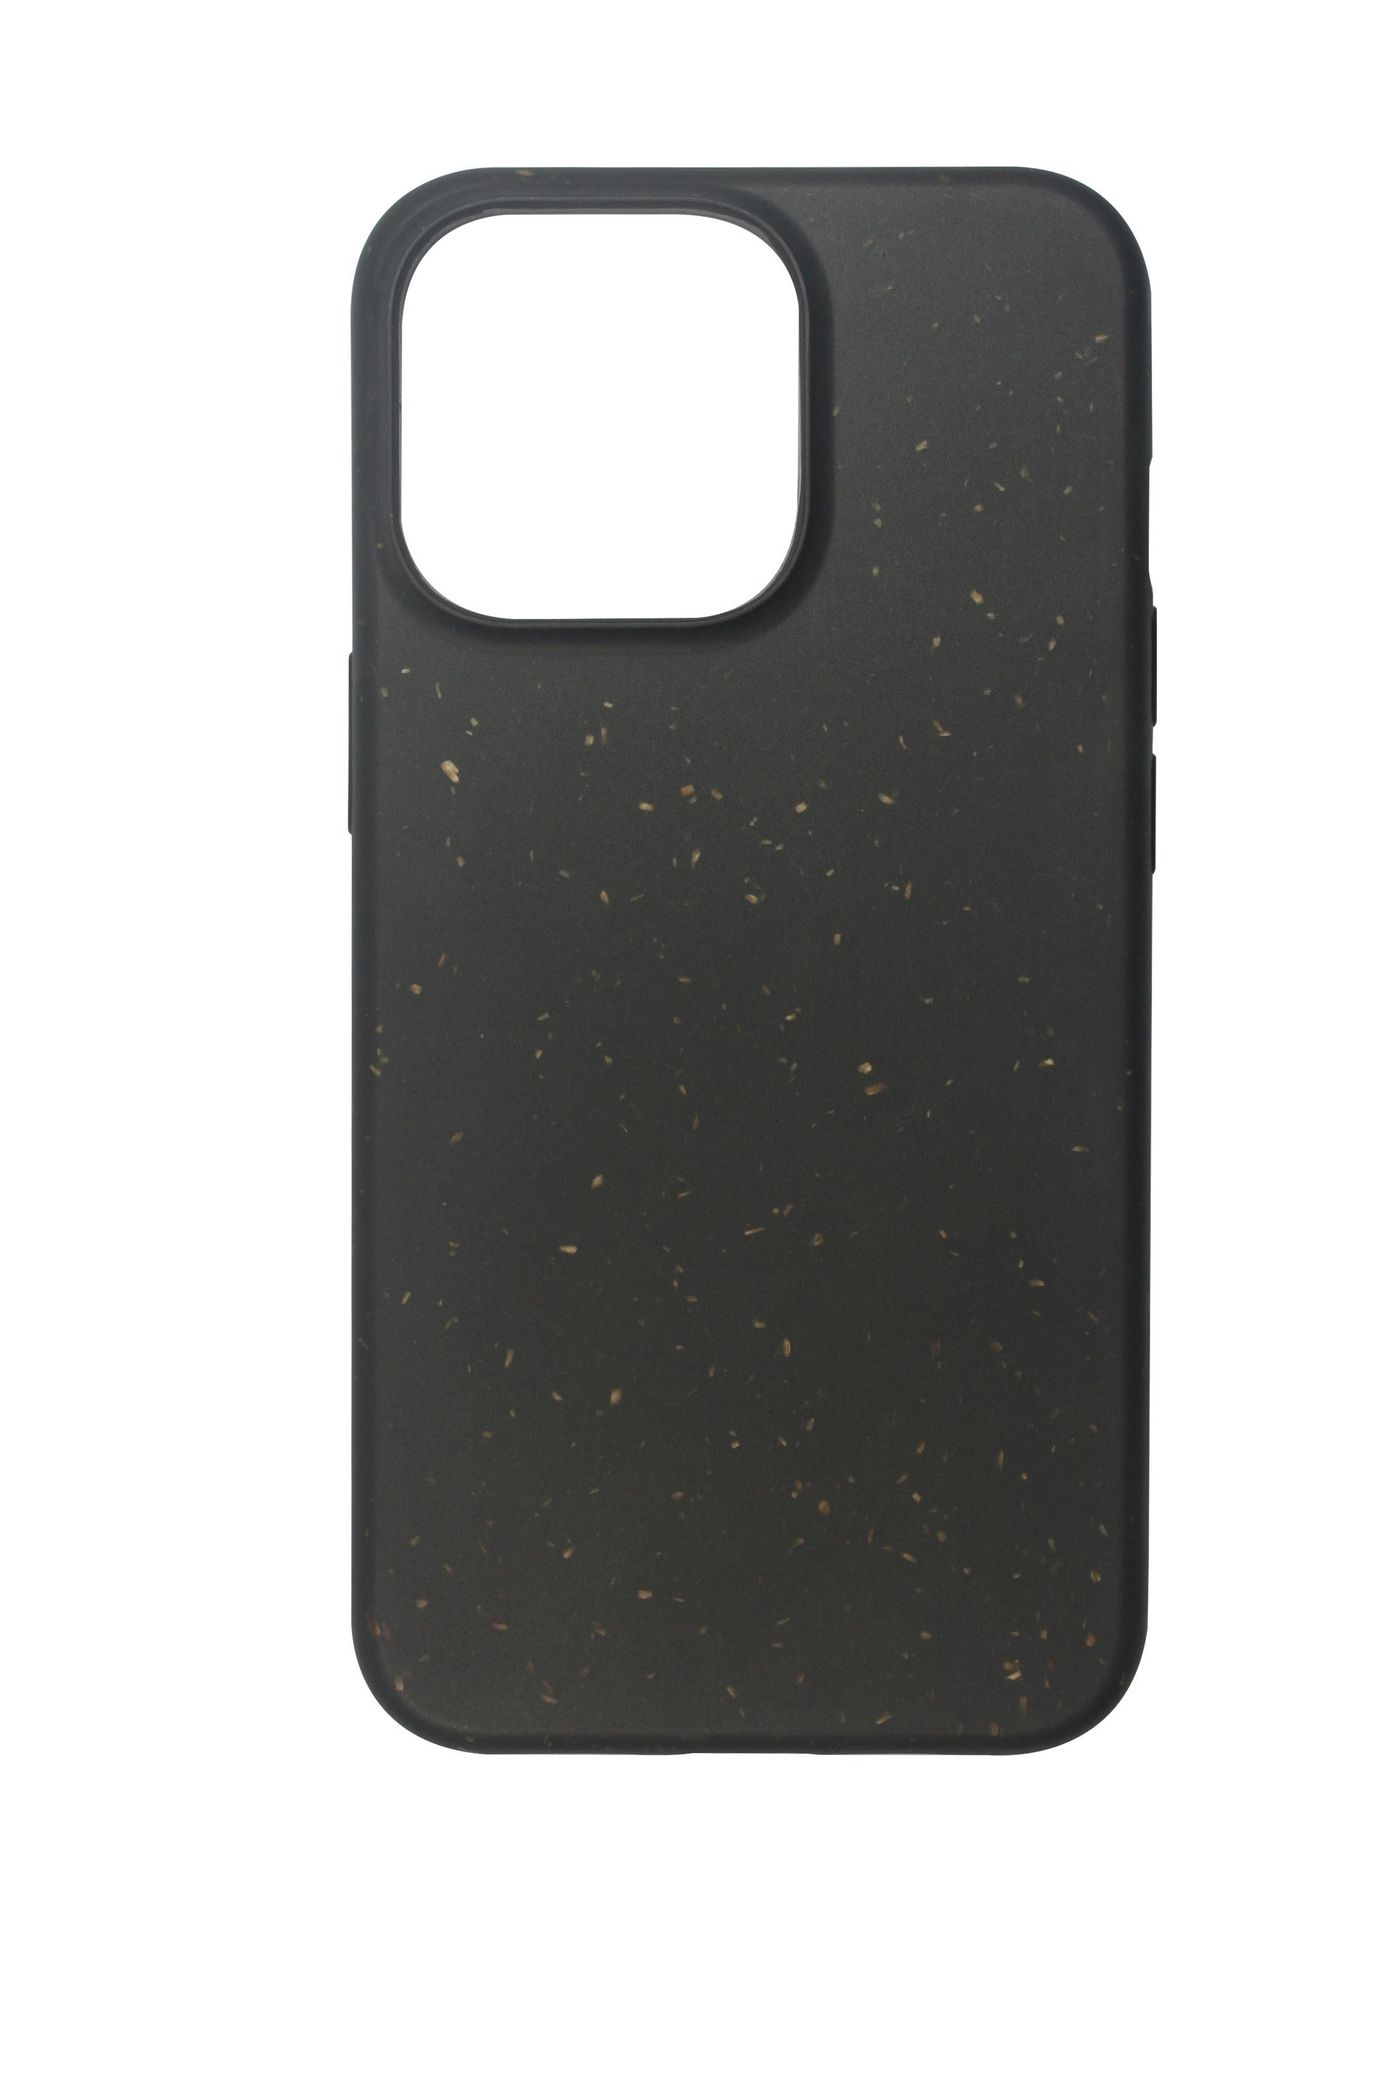 eSTUFF 100% Biodegradable case for iPhone 13 Pro mobile phone case...